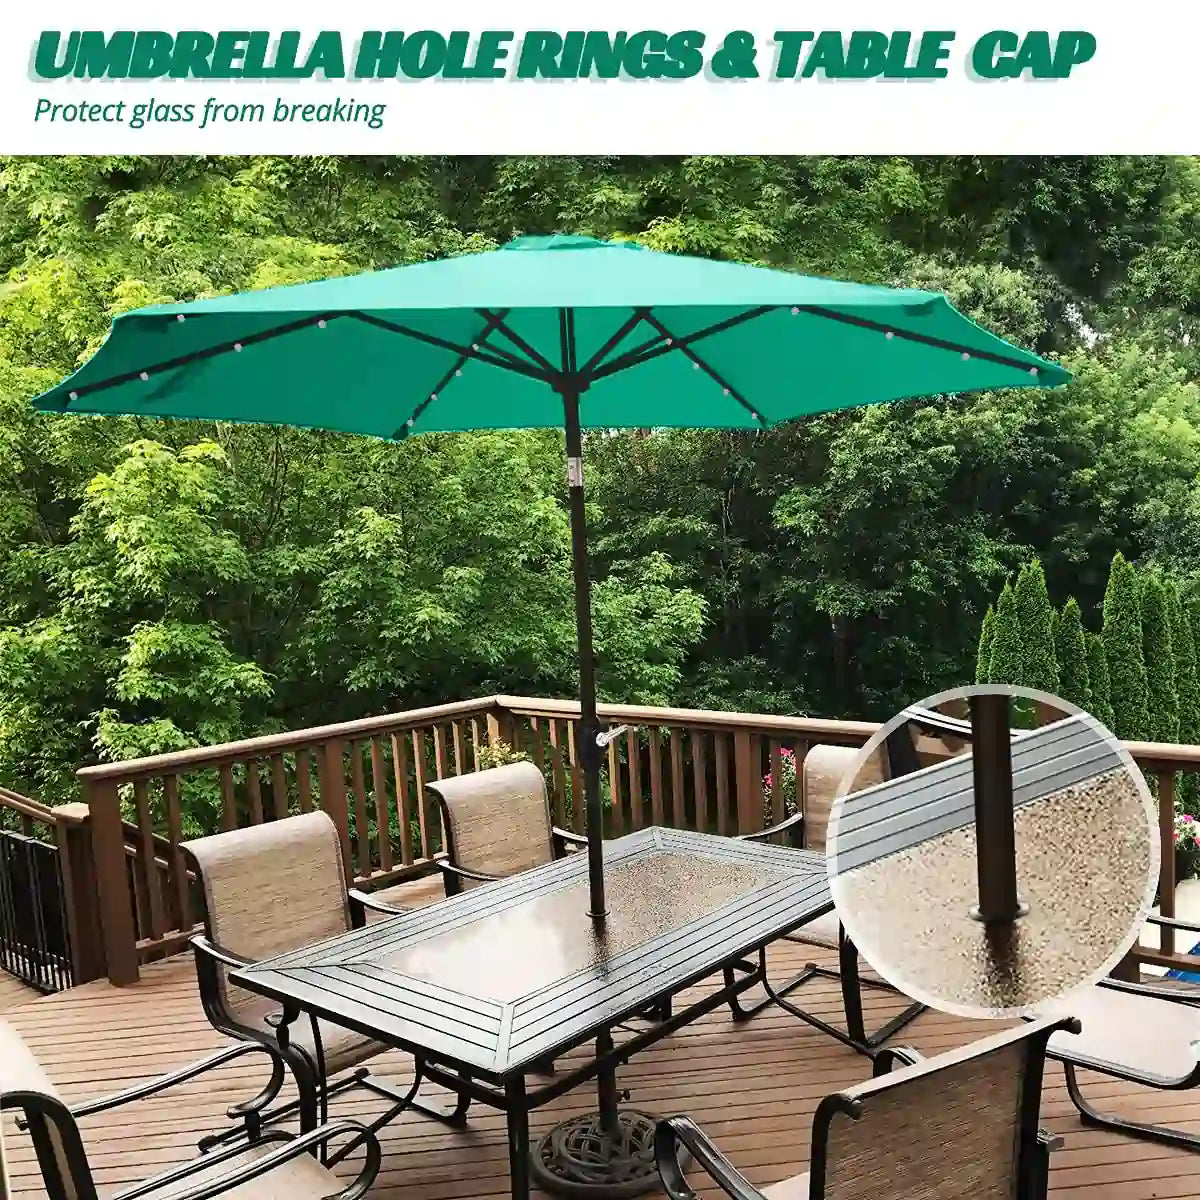 green umbrella with led lights table cap#color_dark green